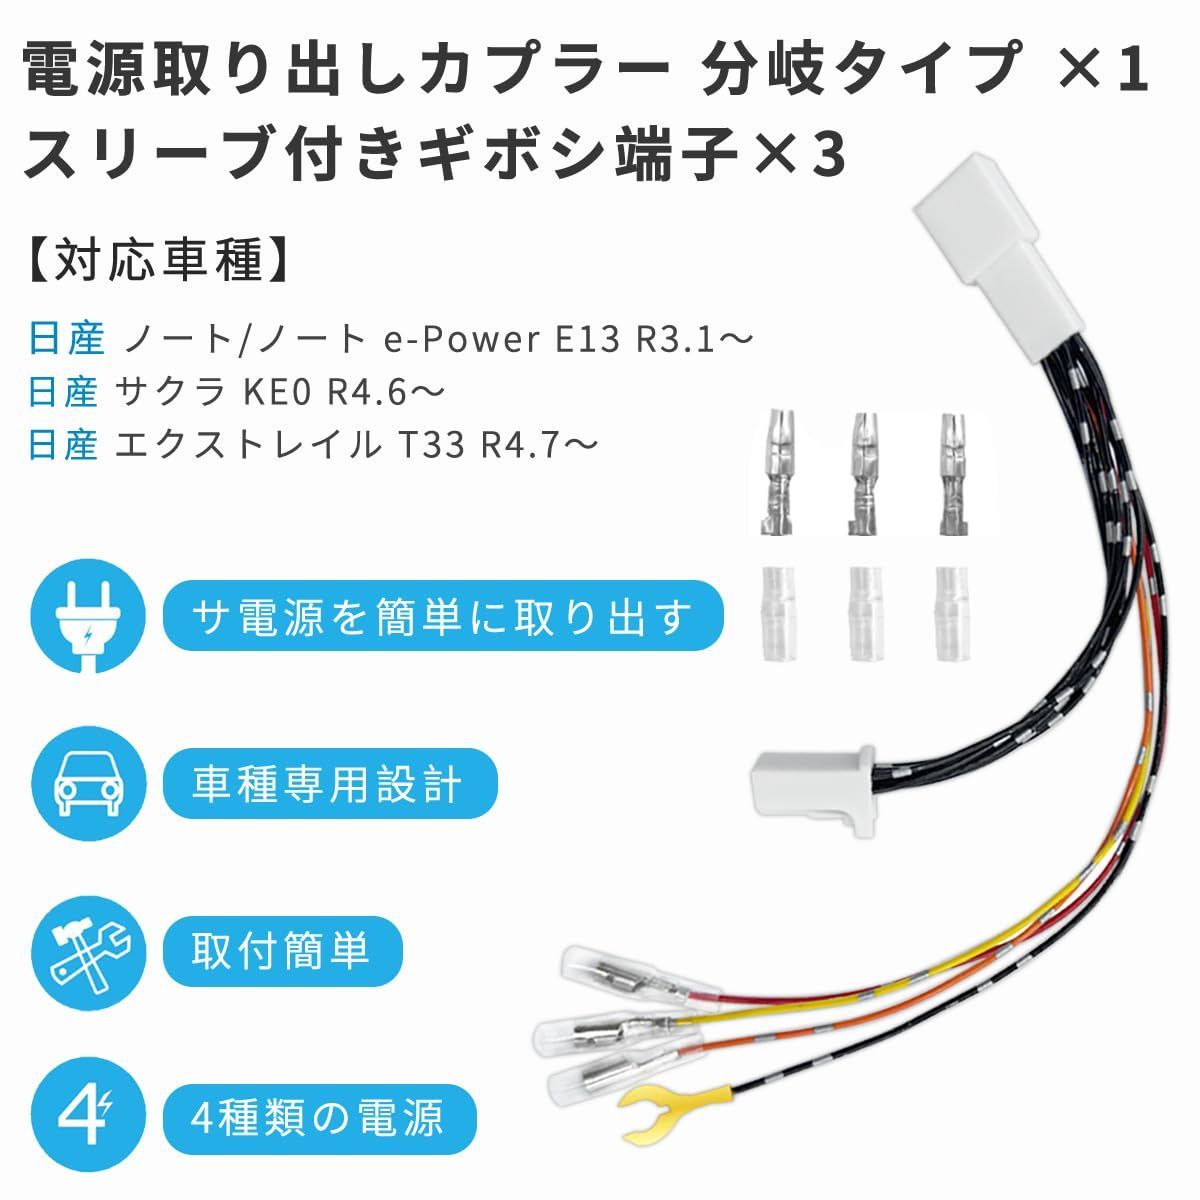 YO-715 【① キックス P15 オプションカプラー A】 e-Power 彡ETC LED レーダー 等取付に彡 電源 取り出し コネクタ ハーネス